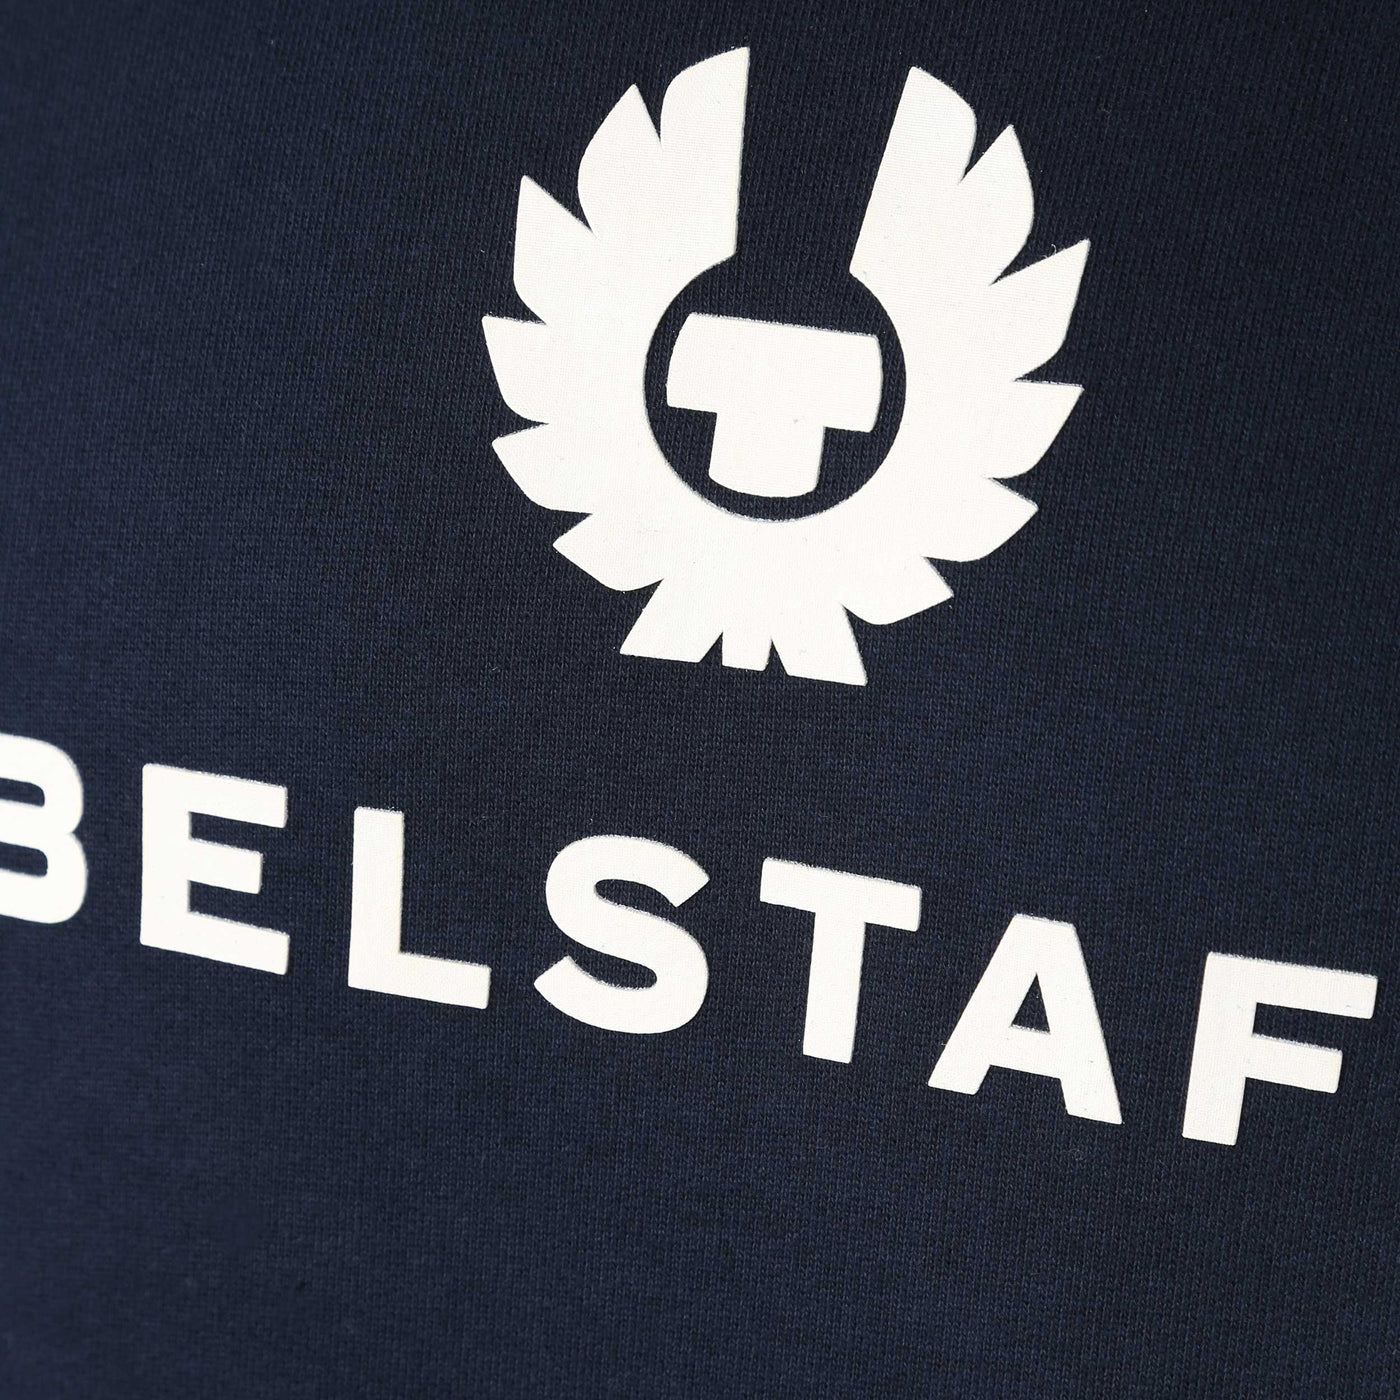 Belstaff Signature Crewneck Sweat Top in Dark Ink Logo